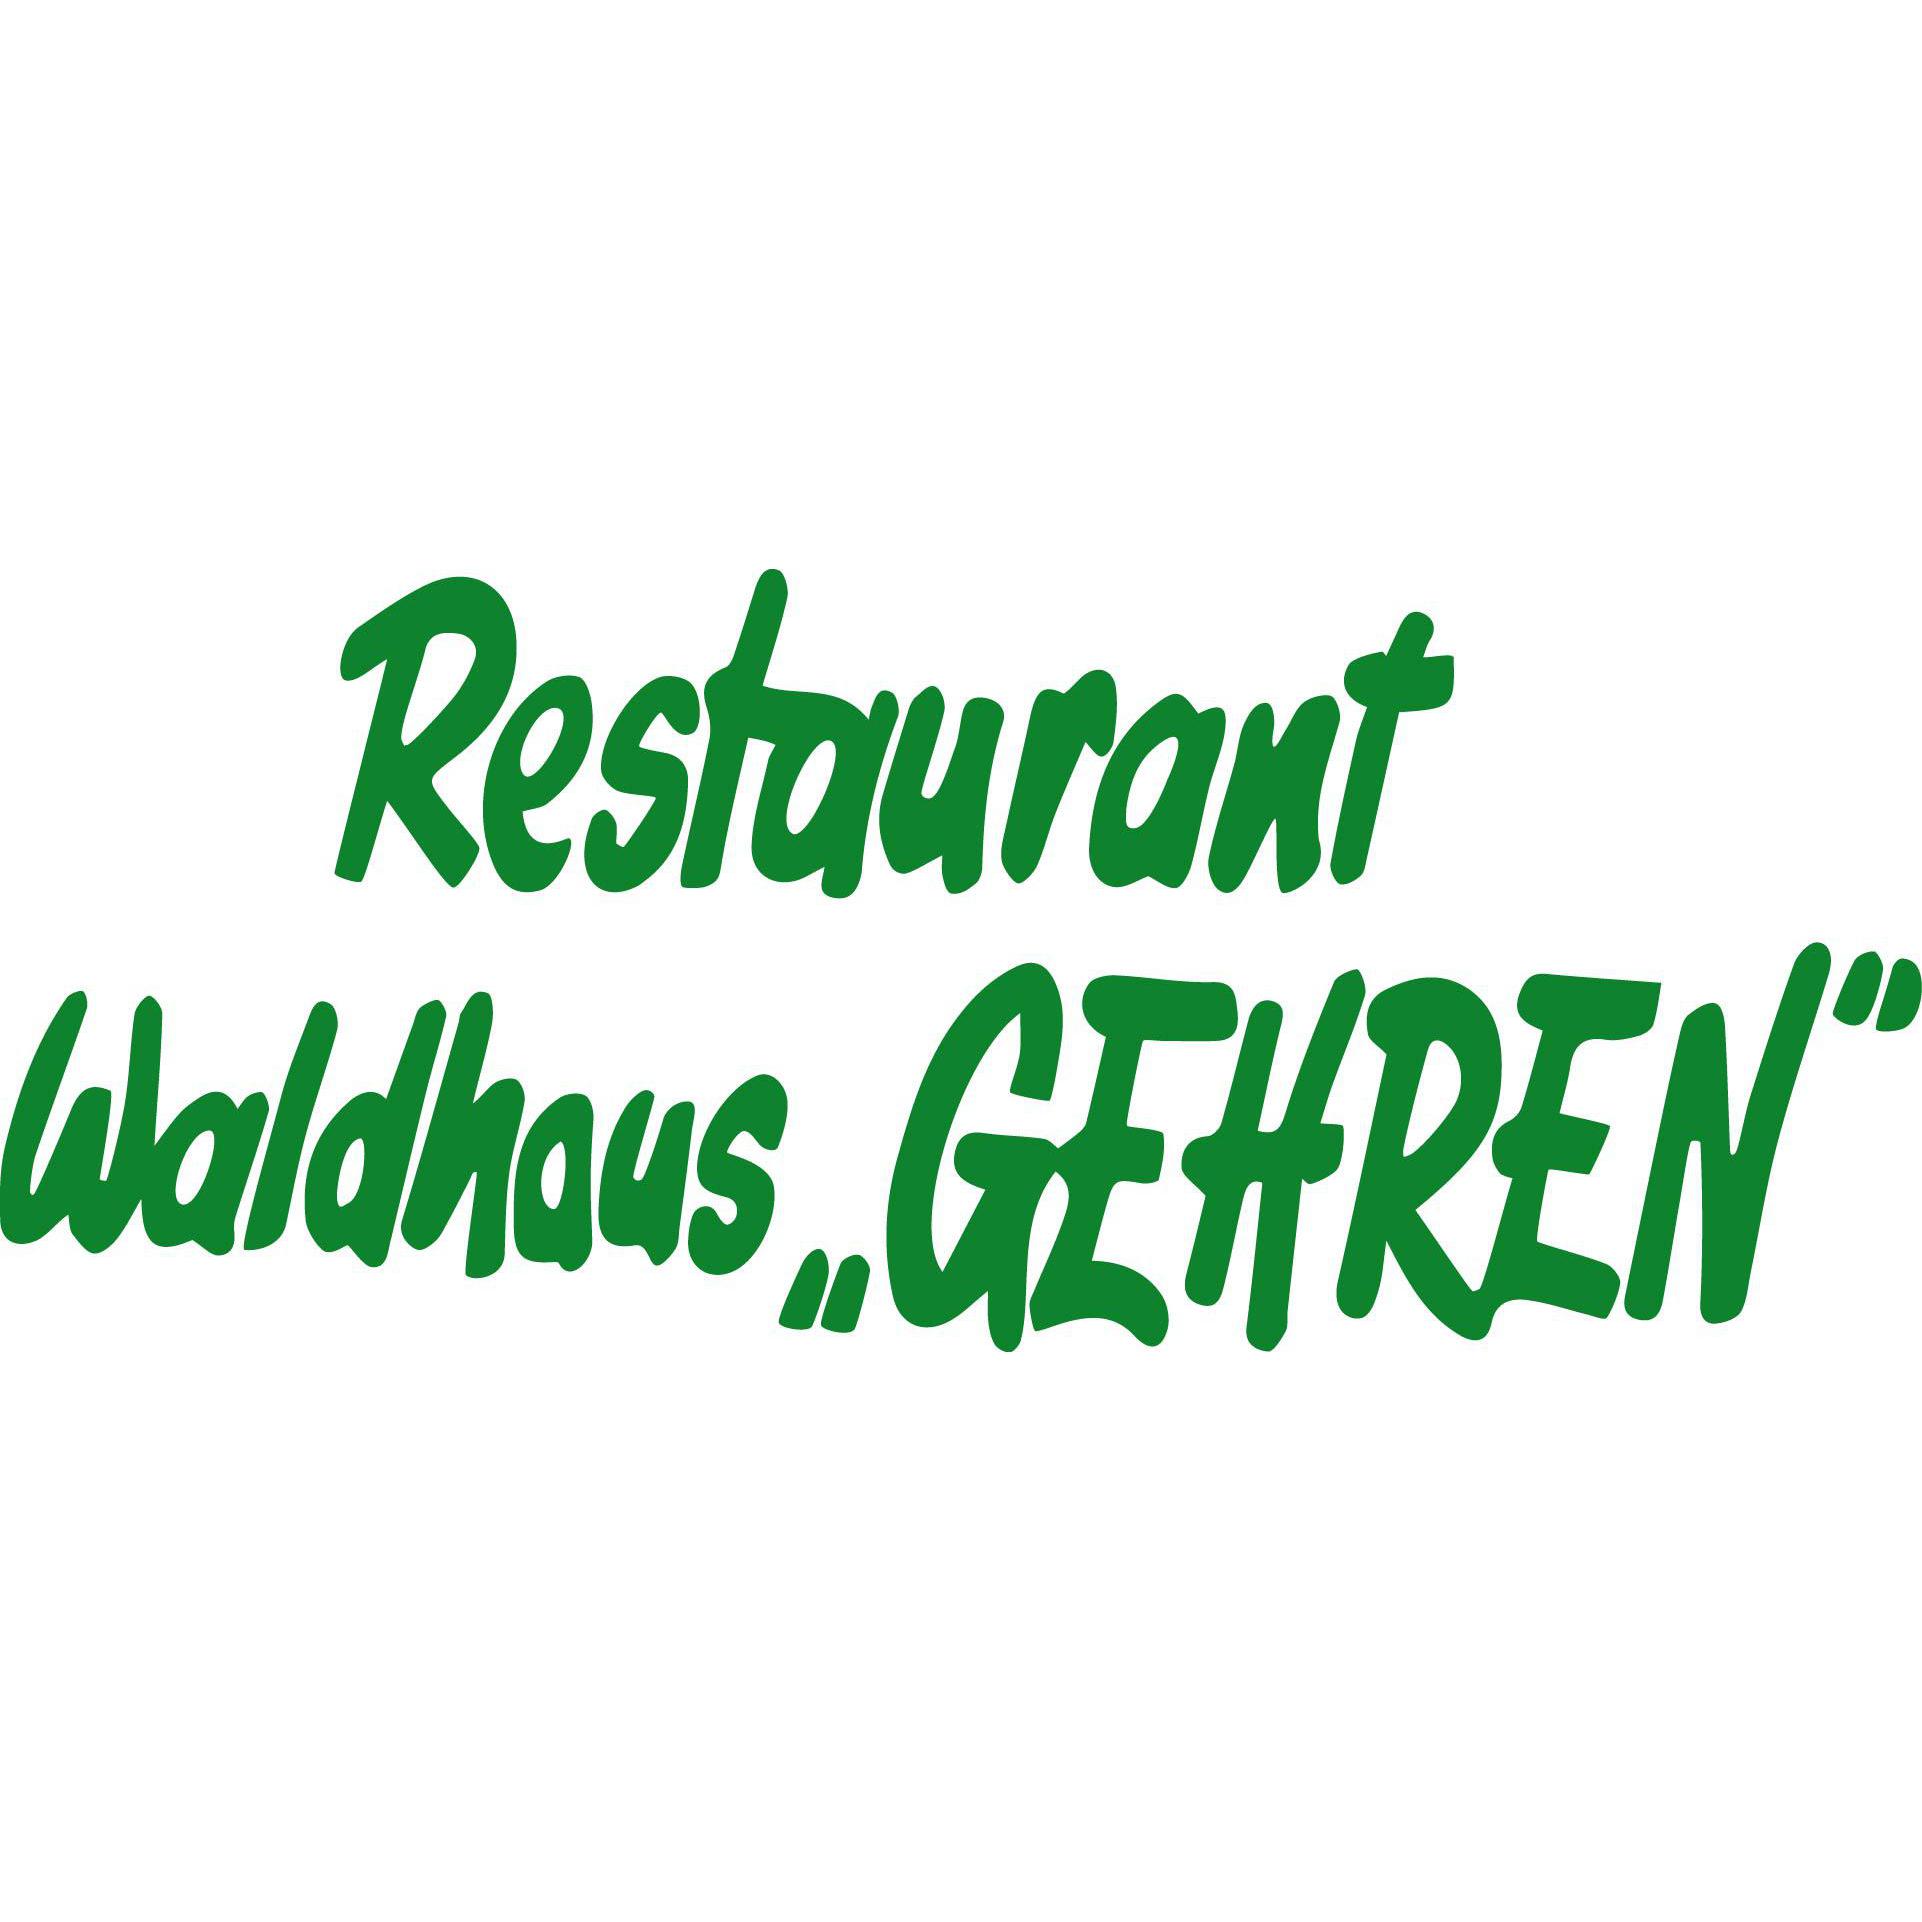 Waldhaus Gehren Logo